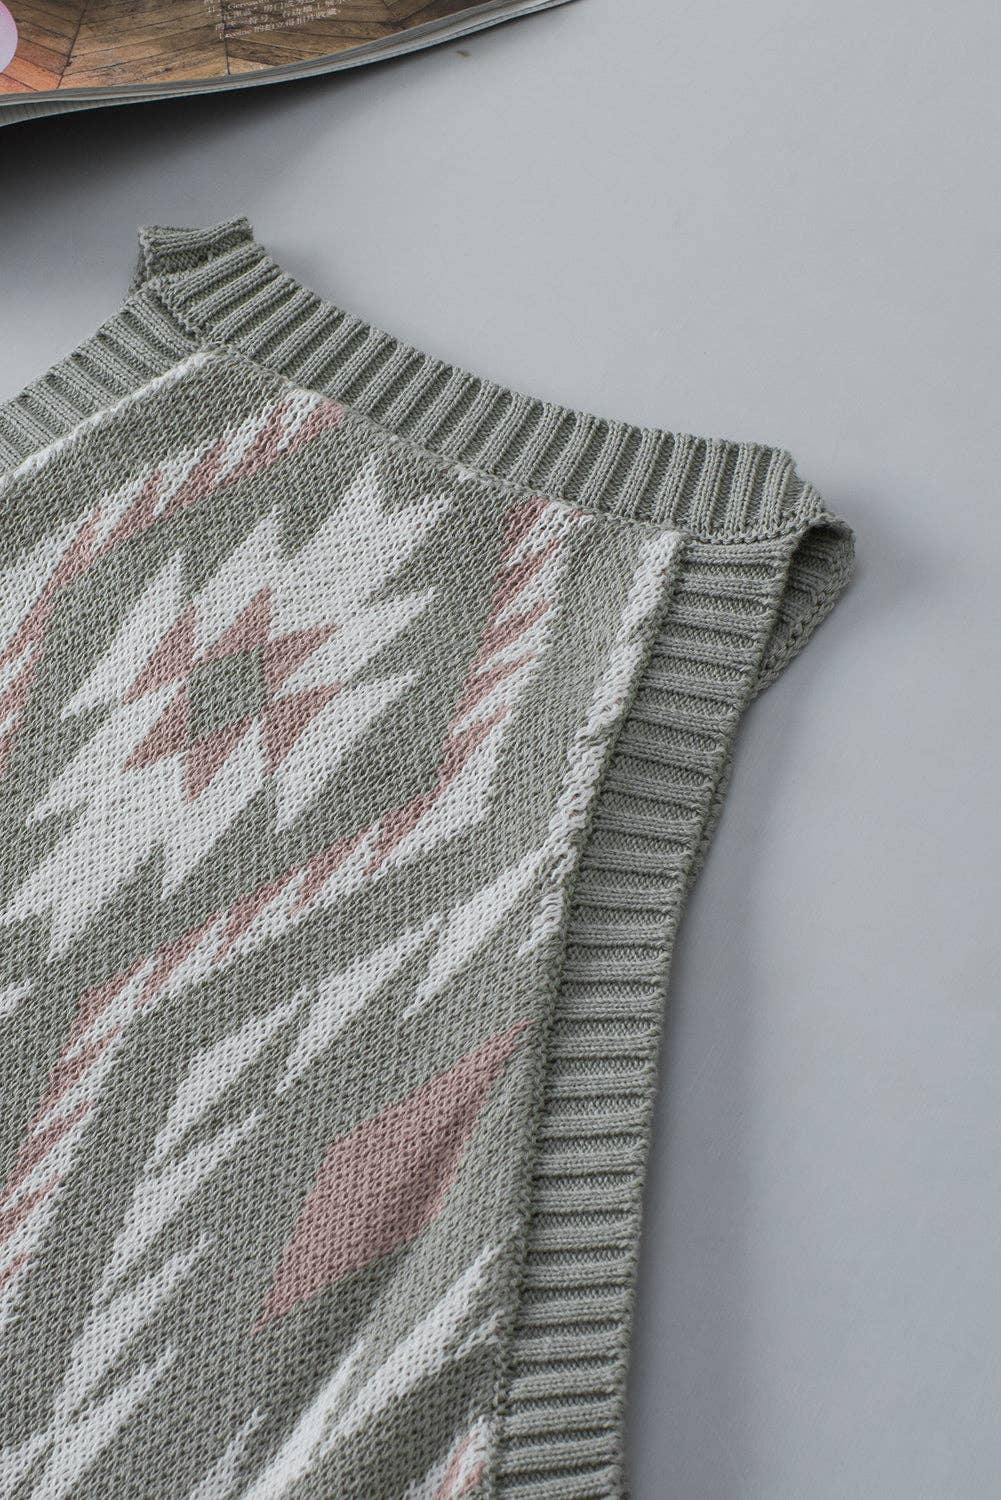 Tribal Aztec Pattern Knit Sweater Tank